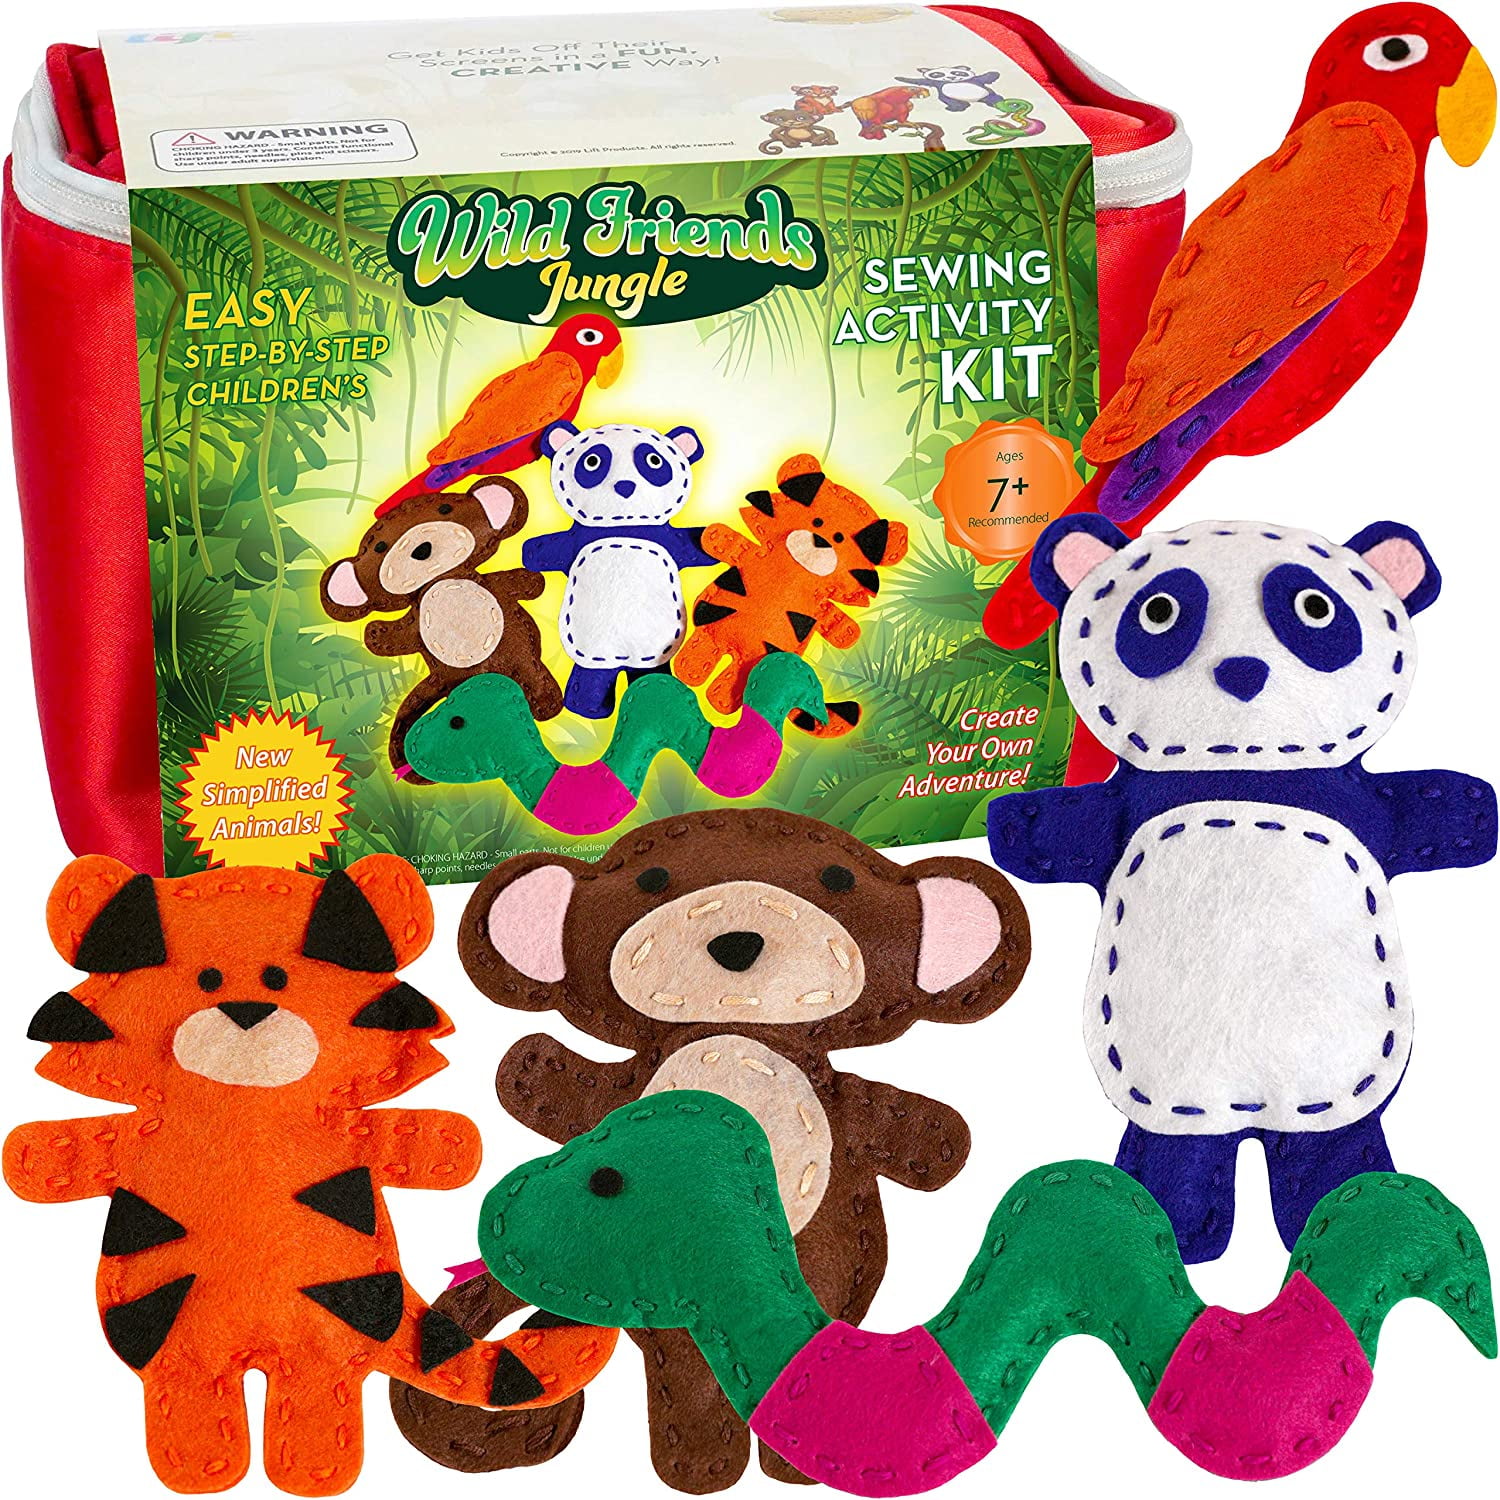 Bryte Jungle Animals Sewing Kit for Kids: A Fun DIY Arts & Crafts